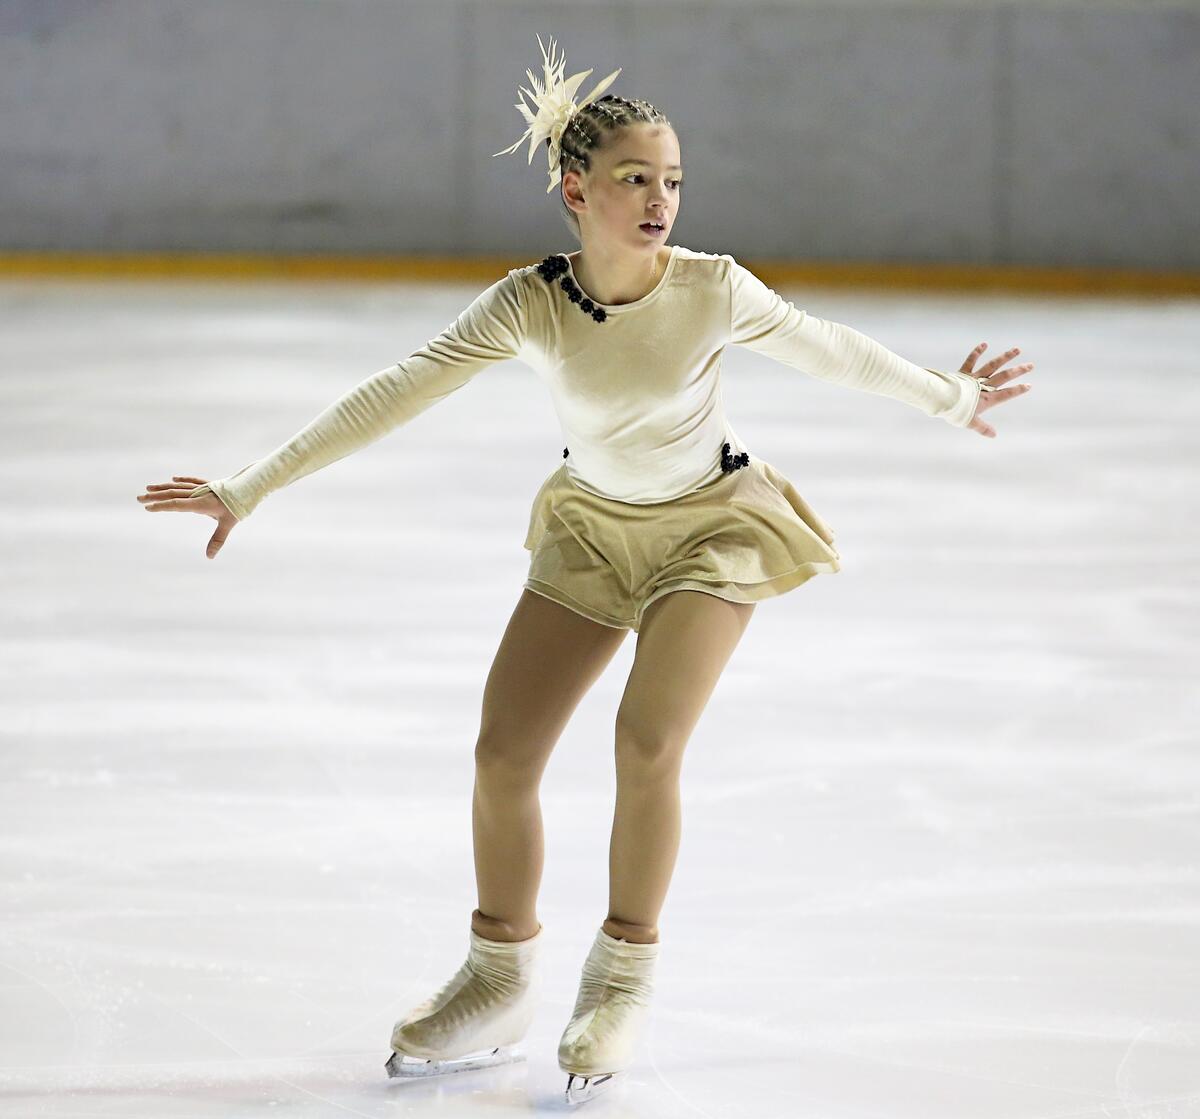 A figure skater on ice skates